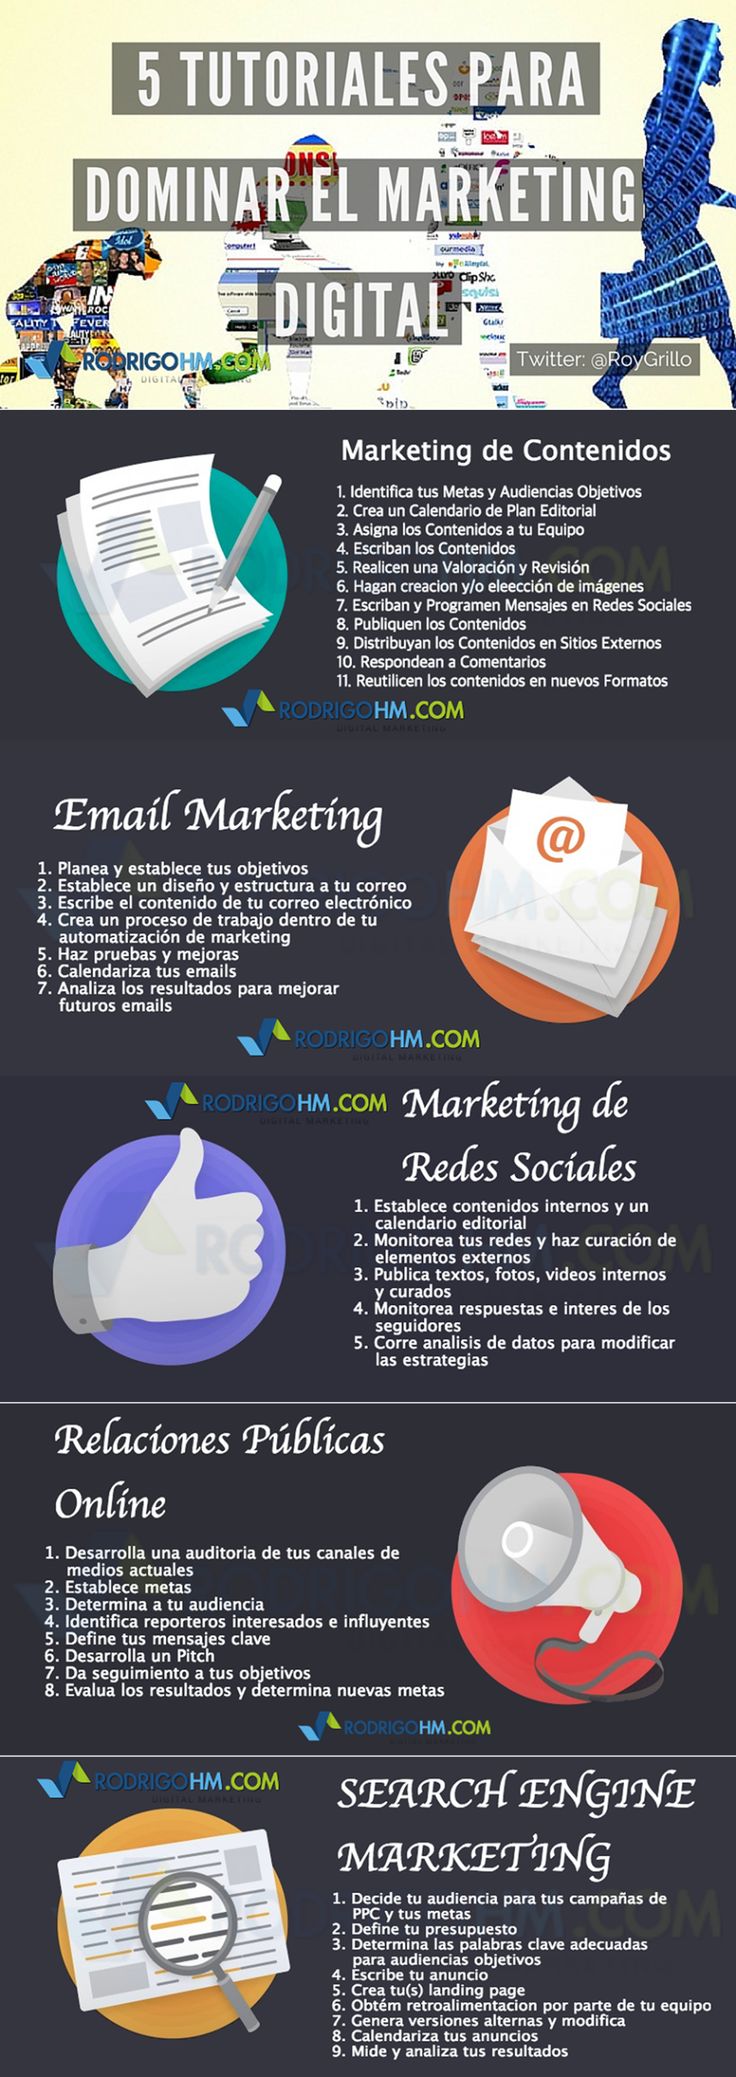 5 tutoriales para dominar el Marketing Online #infografia #infographic #marketing